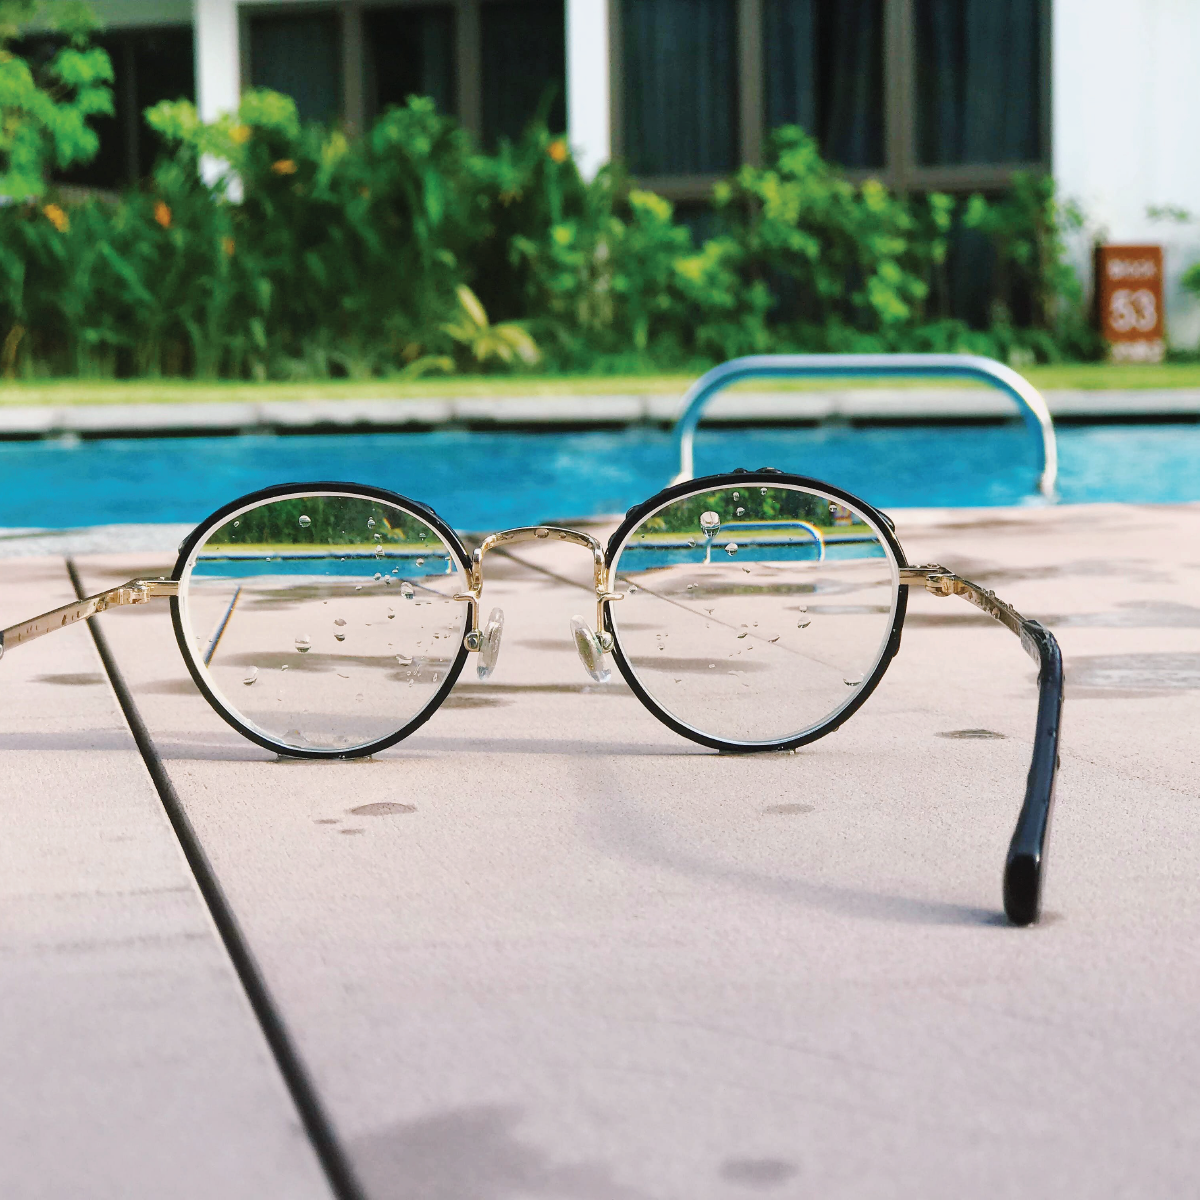 Glasses by pool